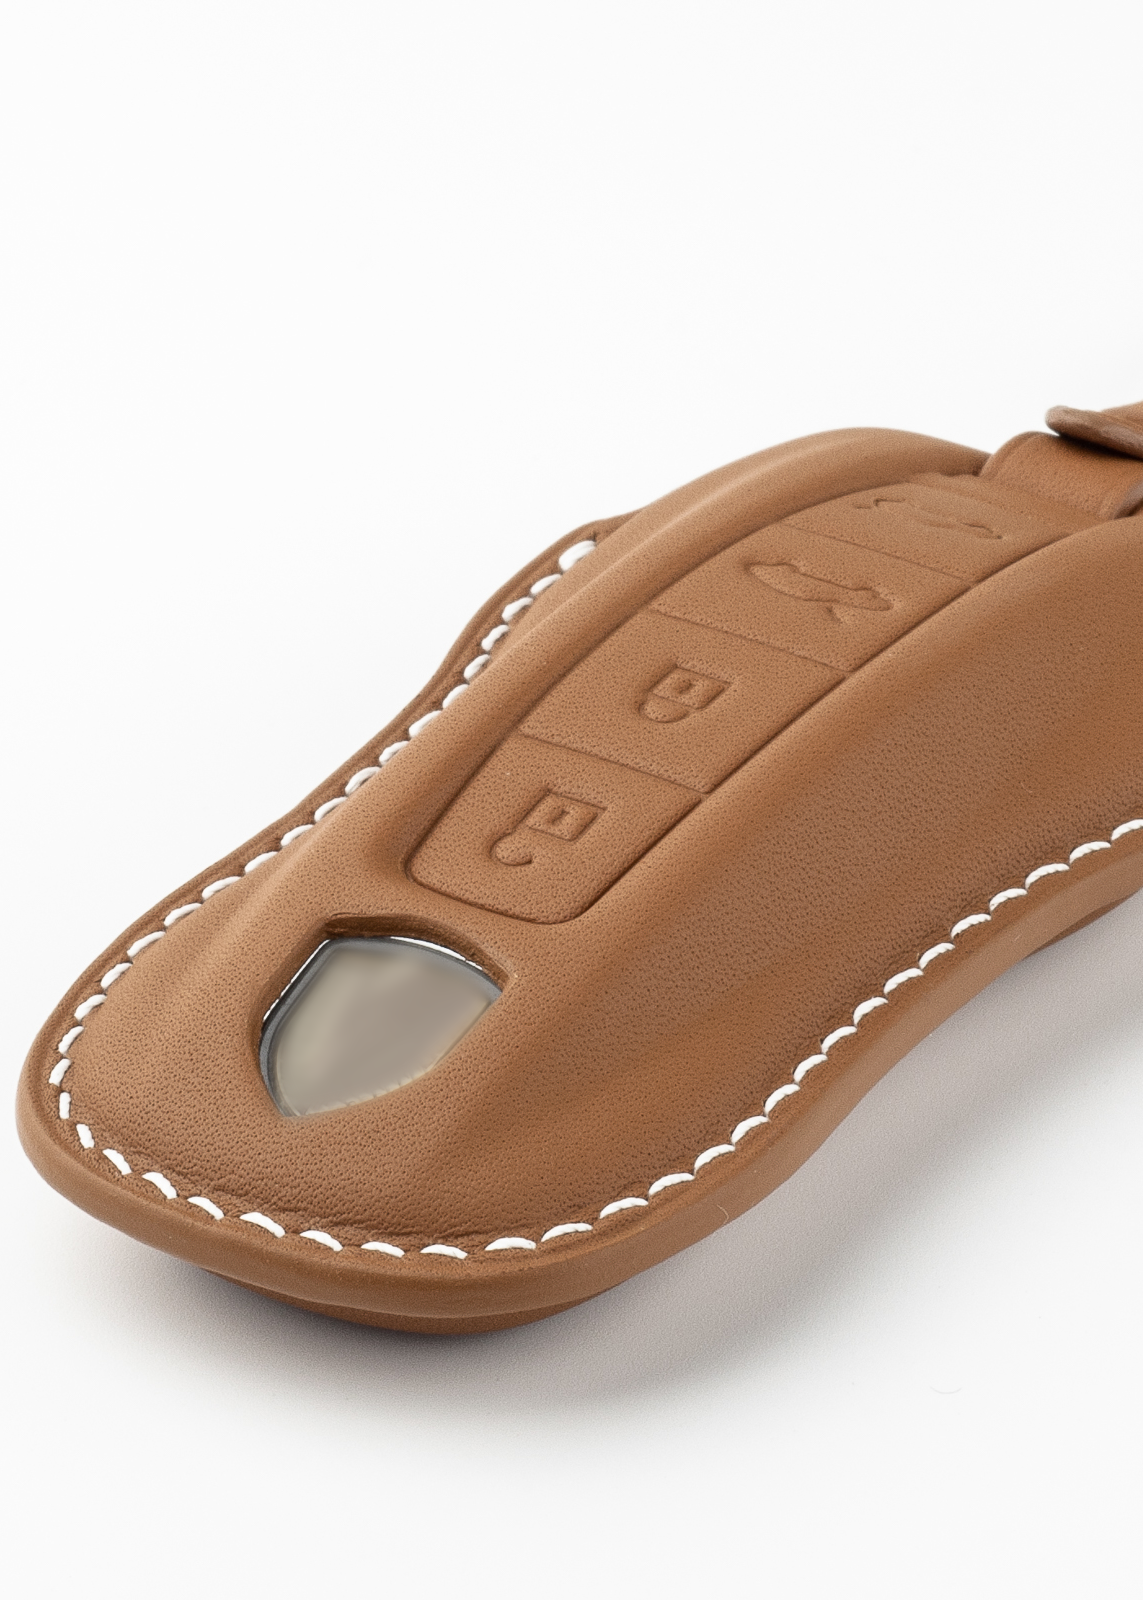 Timotheus for Porsche key fob cover case, Compatible with Porsche key case, Handmade Genuine Leather for Porsche keychains | PR66